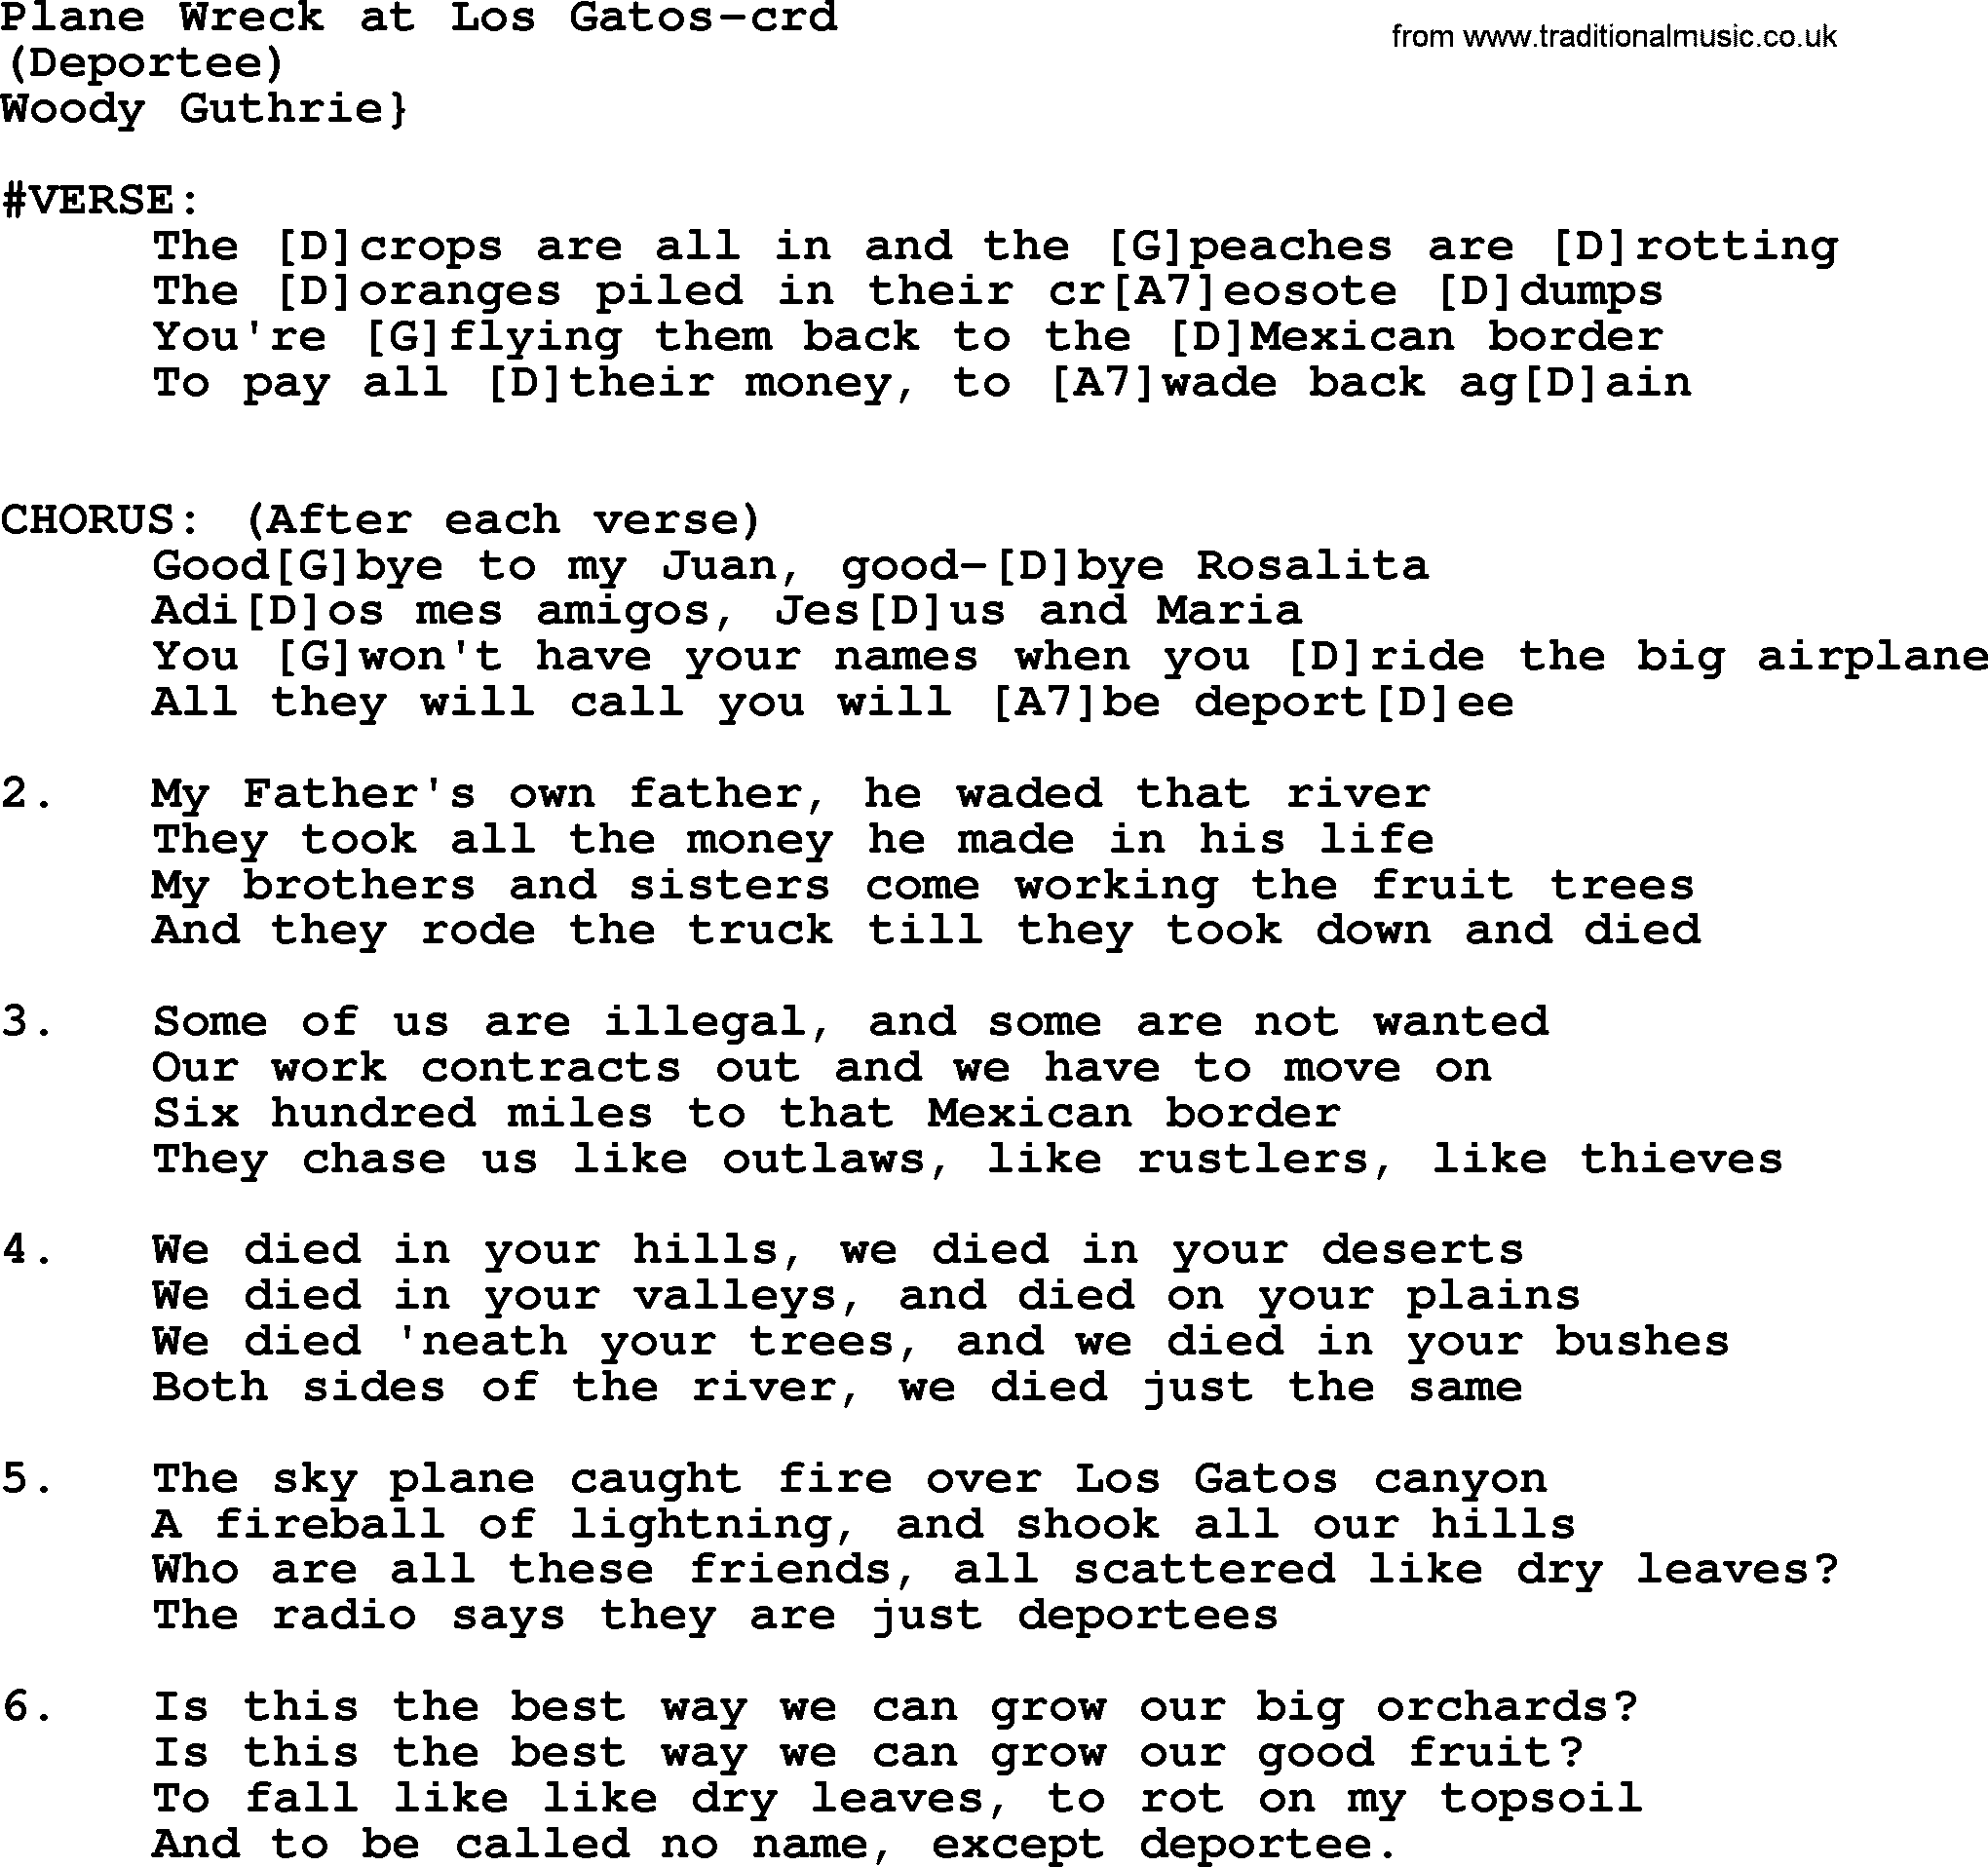 Woody Guthrie song Plane Wreck At Los Gatos lyrics and chords